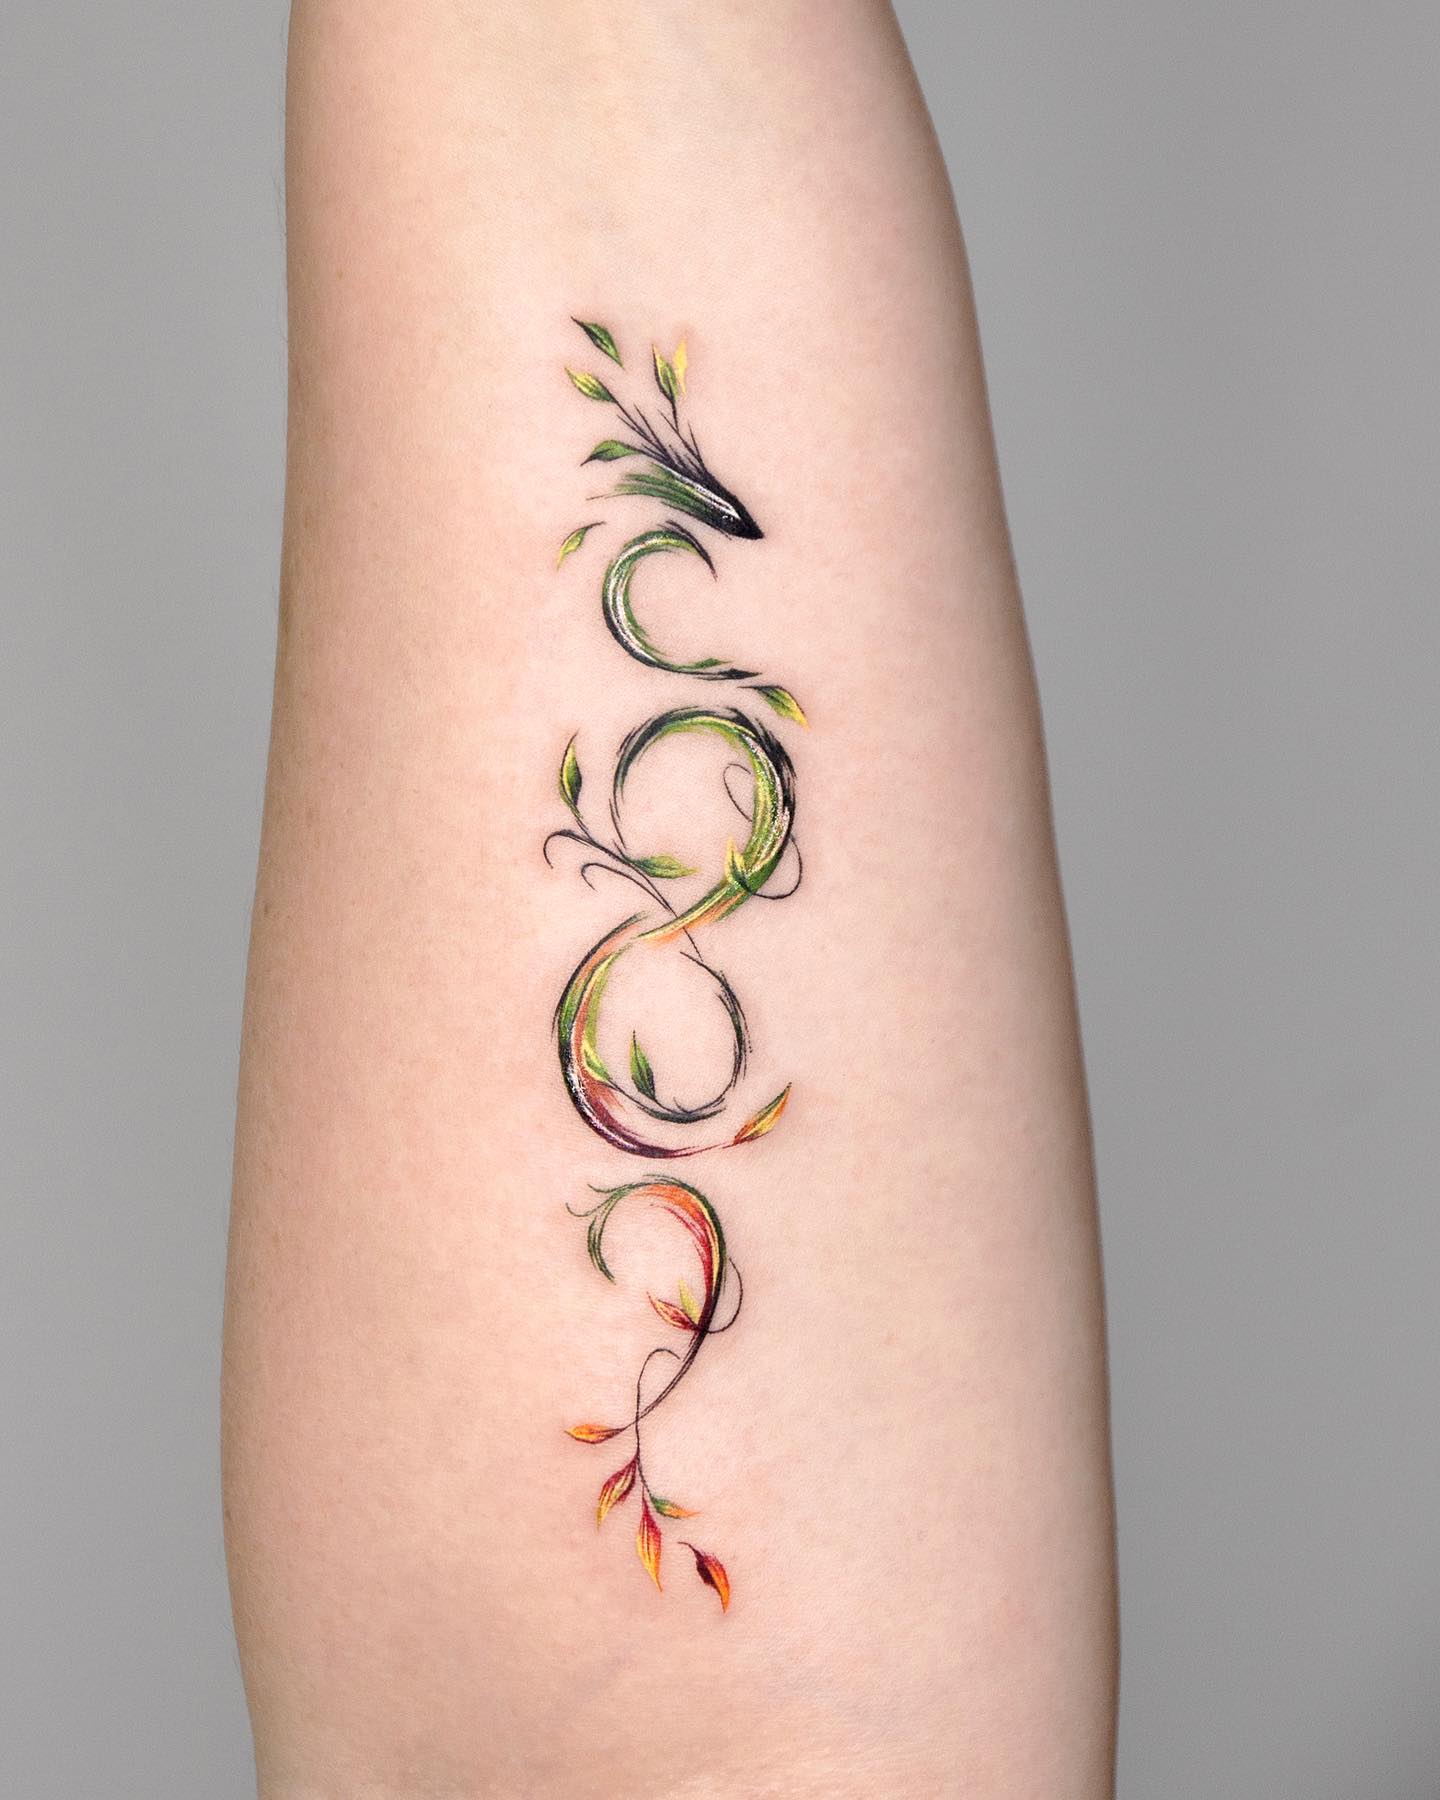 Tatuaje de infinito artístico único